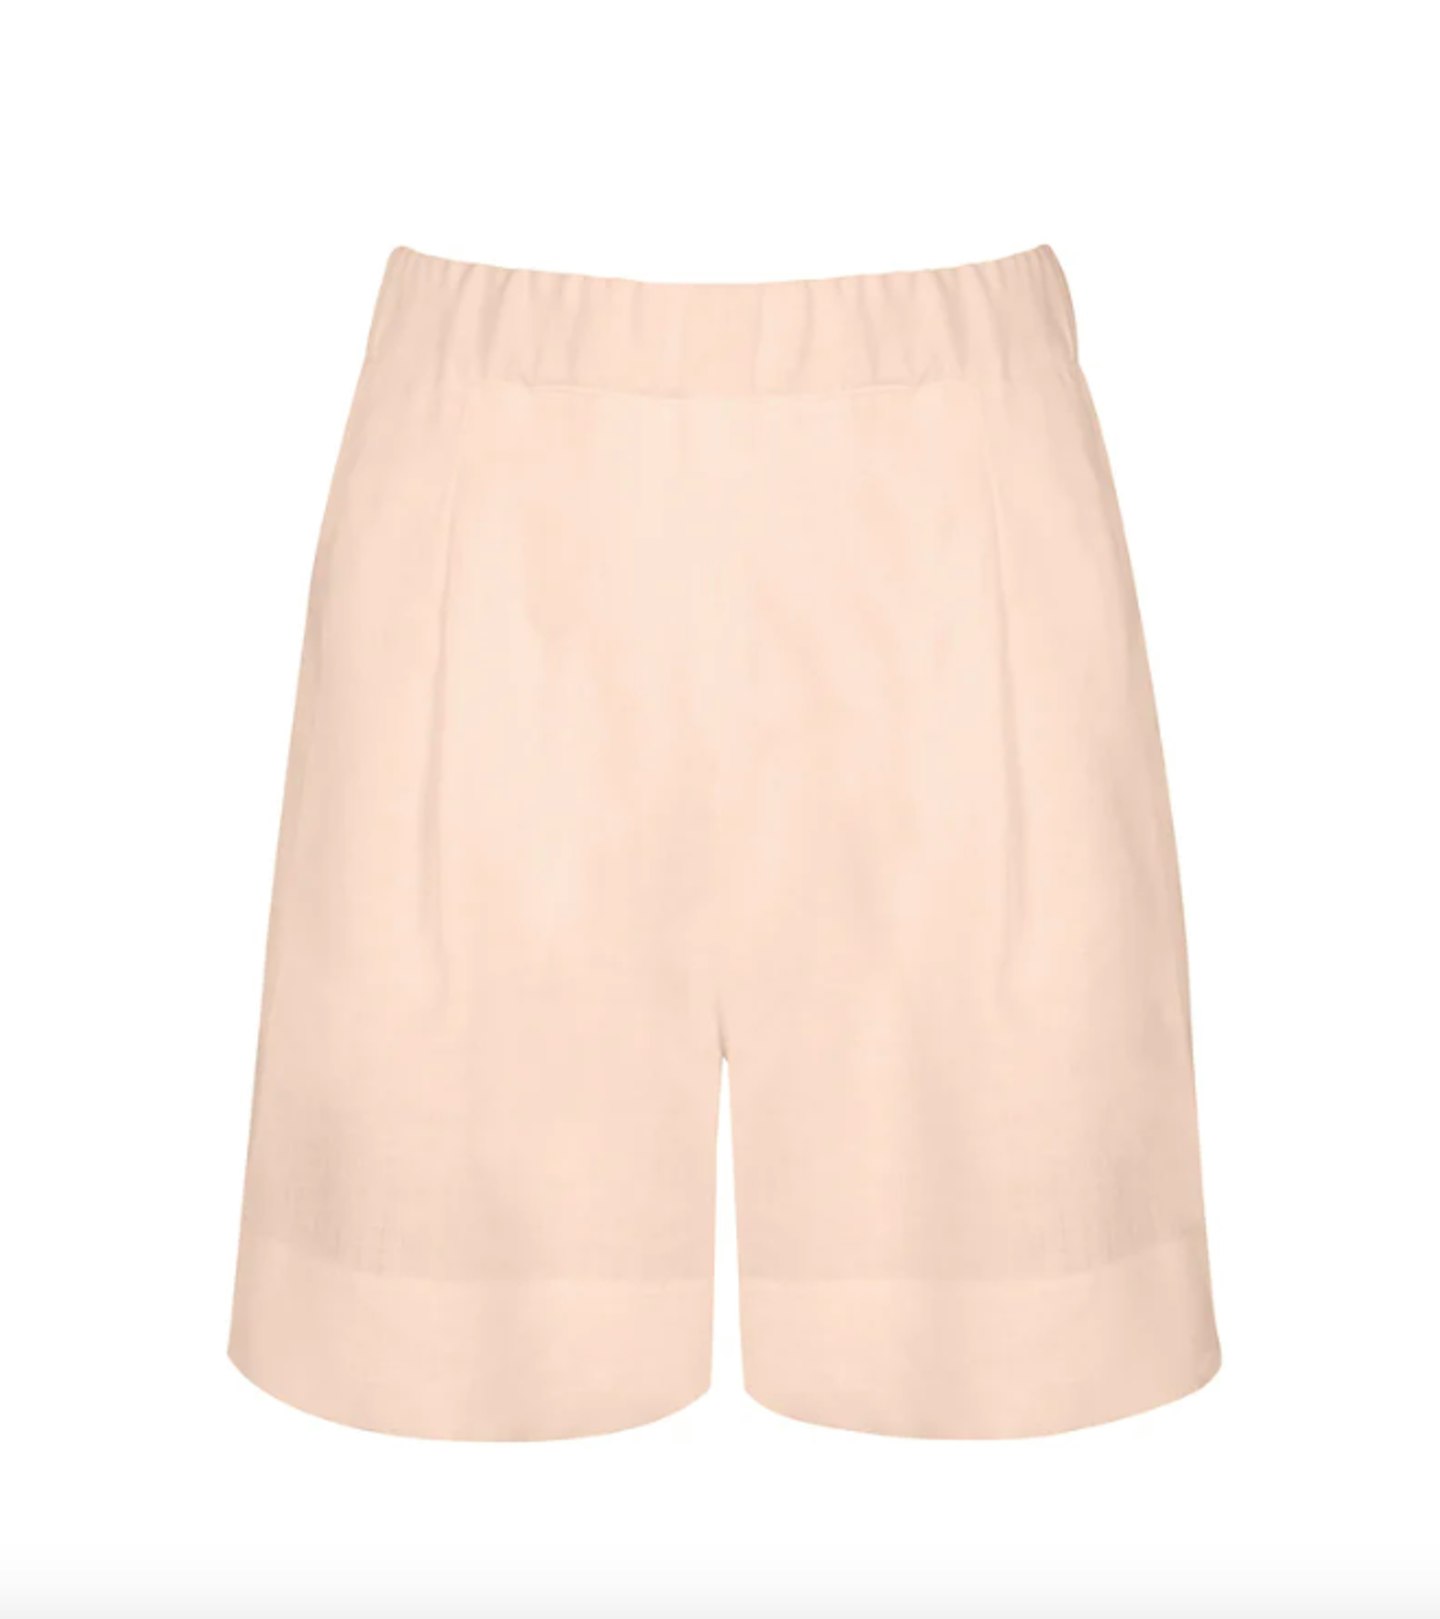 Asceno, Zurich Peach Organic Linen Shorts, £155